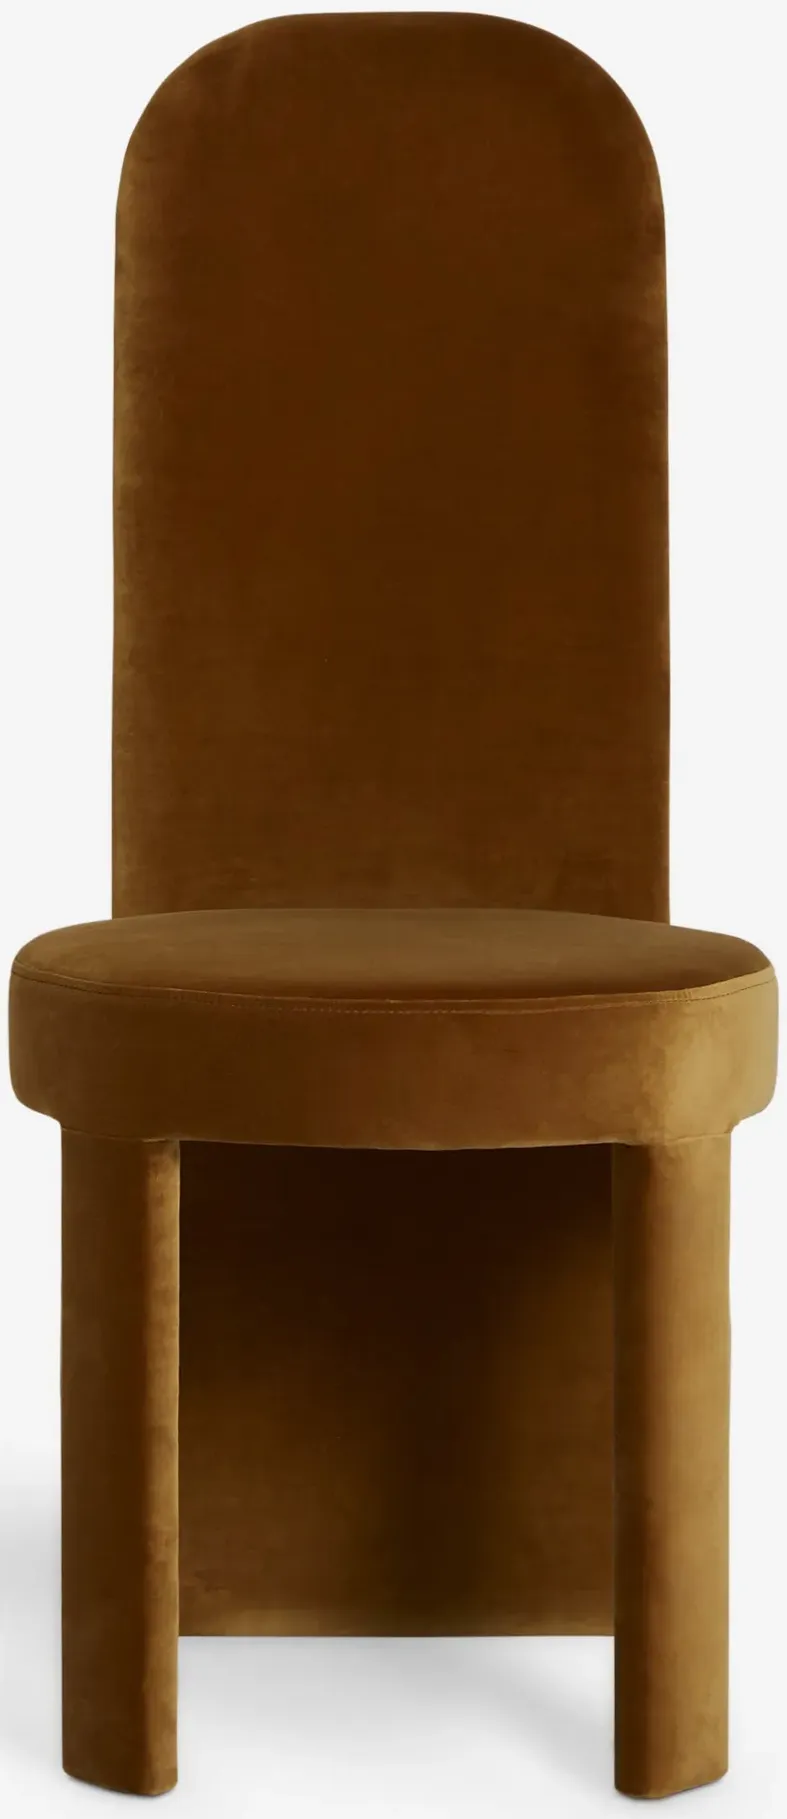 Halbrook Dining Chair (Set of 2) by Sarah Sherman Samuel